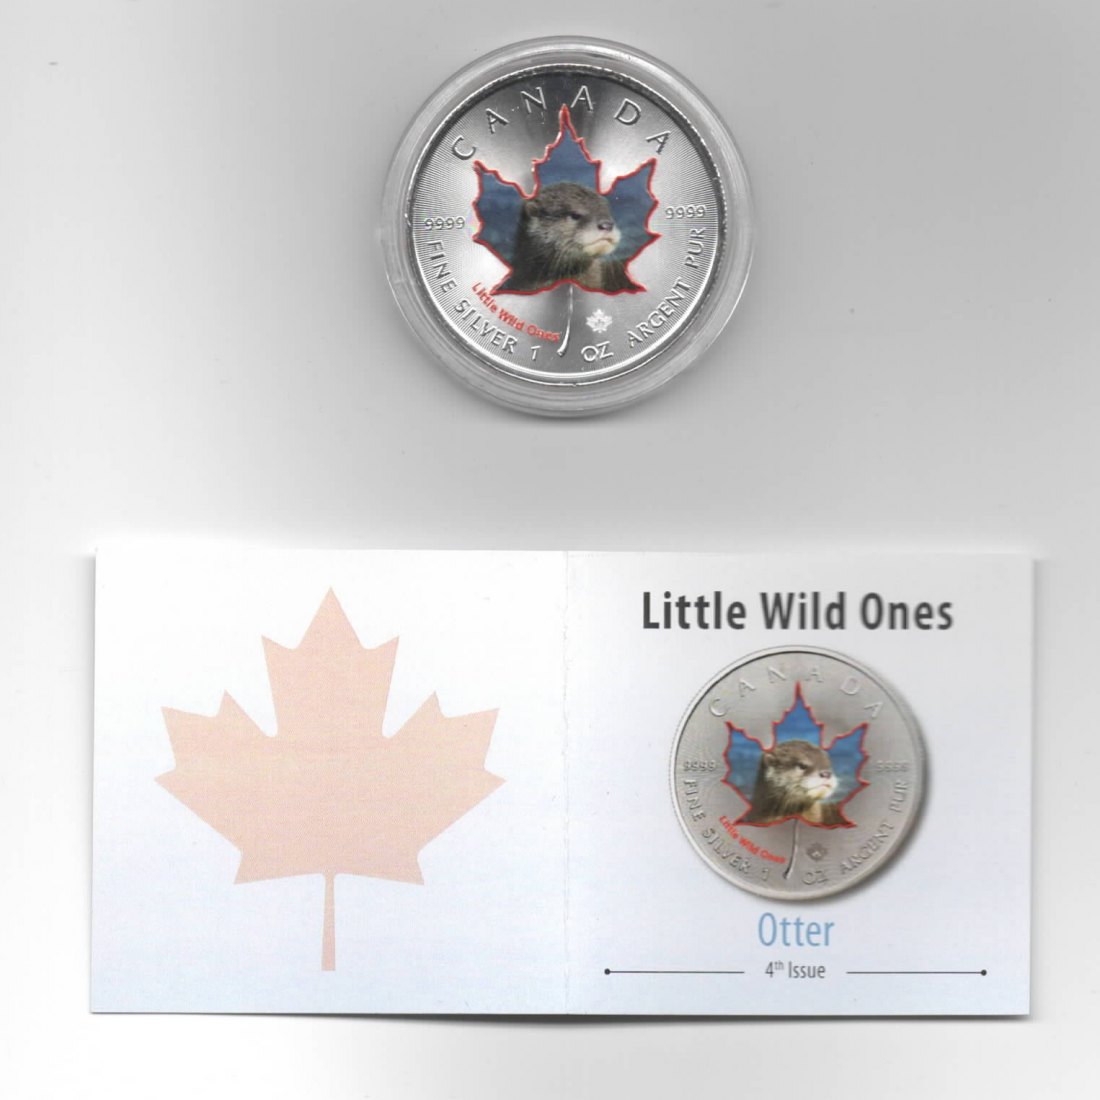  Canada, Maple Leaf, Little Wild Ones, 5 $, Otter, Farbe, 2500 St., Zertifikat, 1 unze, oz Silber   